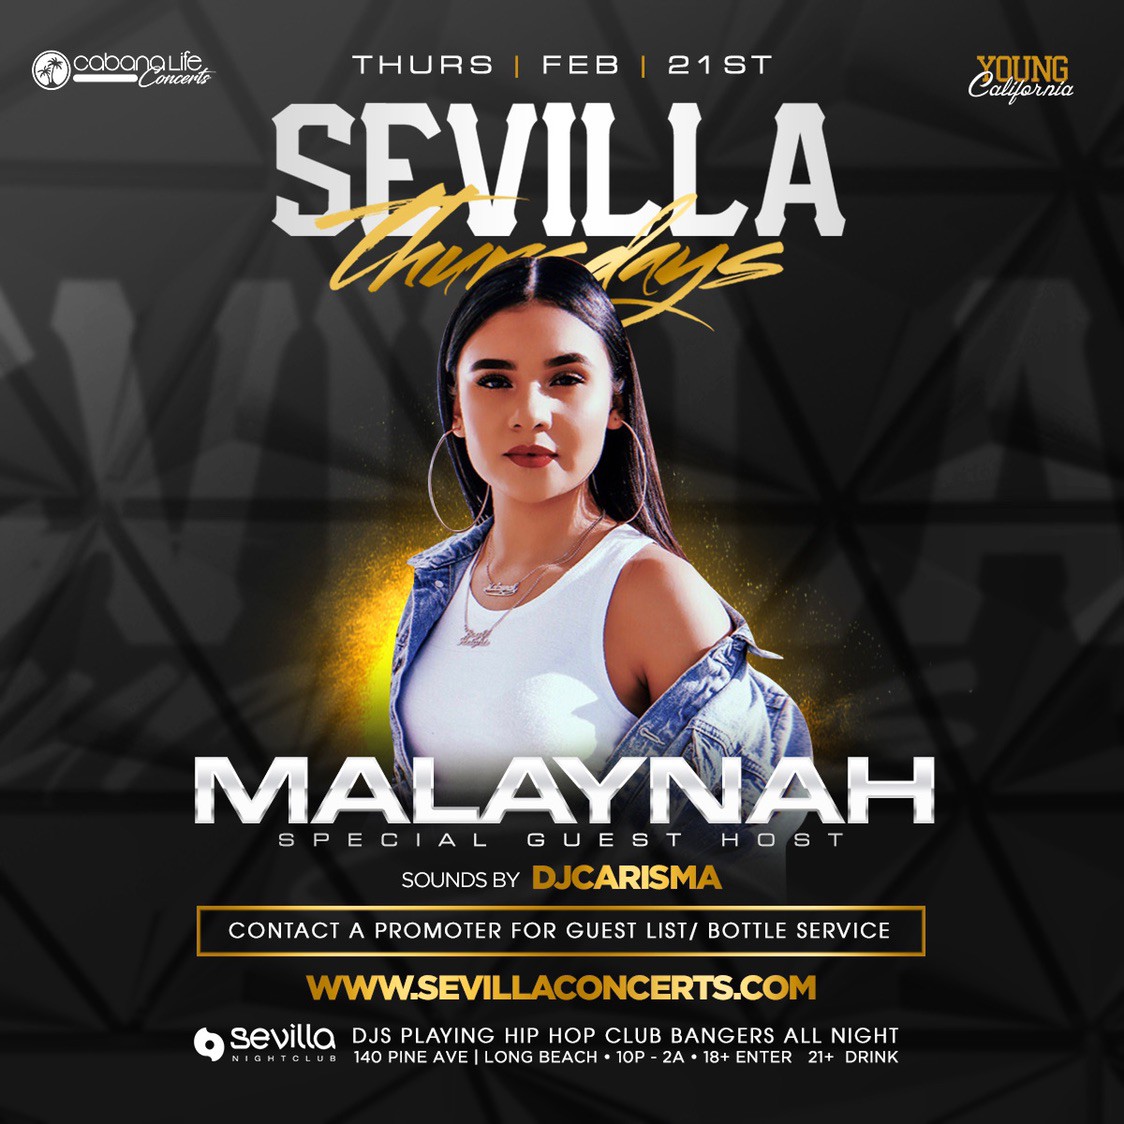 Buy Tickets to Malaynah at Sevilla Nightclub in Long beach with Dj ...